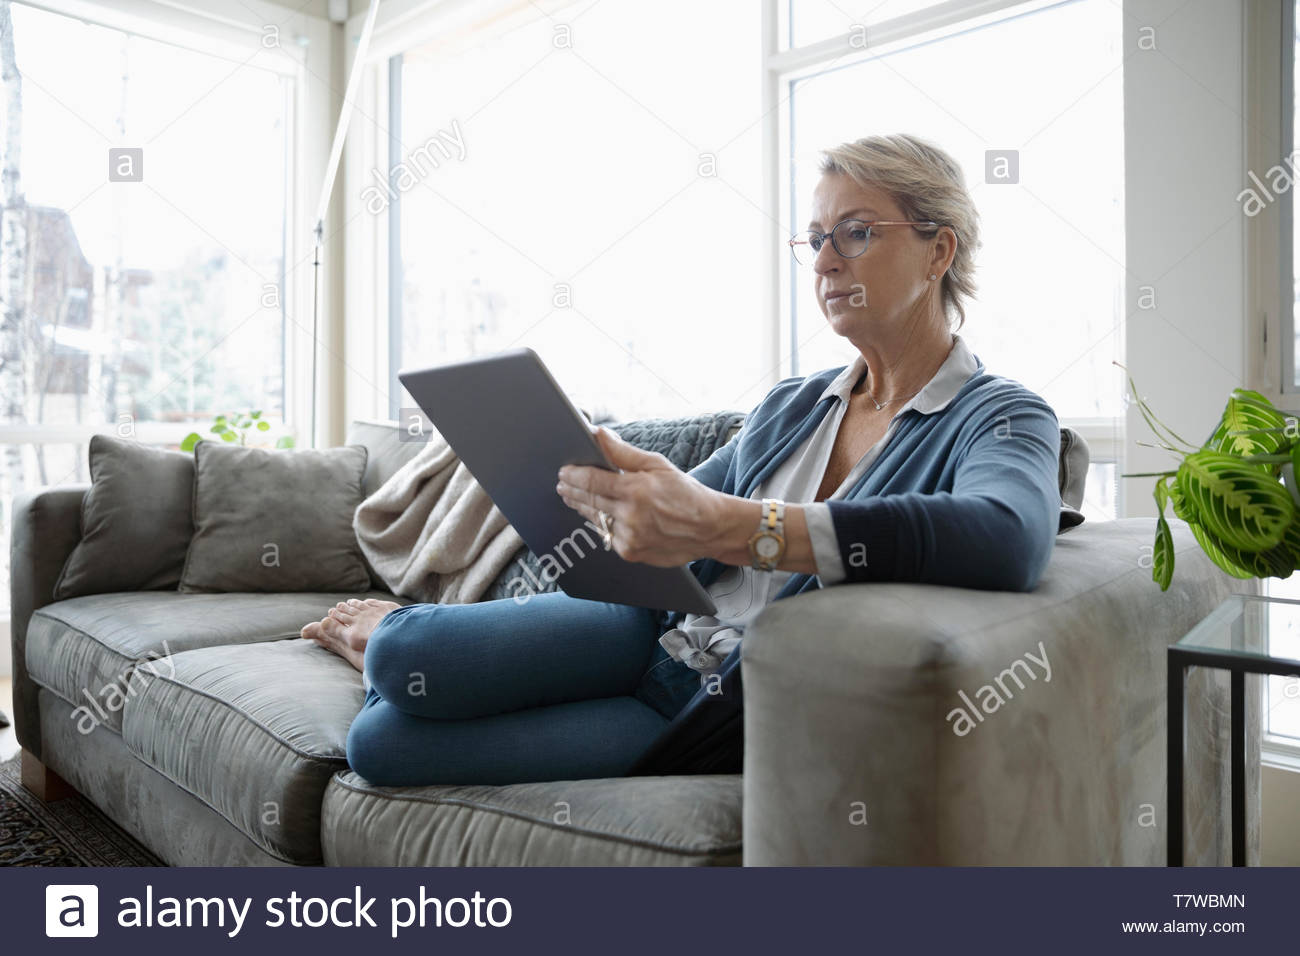 Mature woman using digital tablet on living room sofa Stock Photo